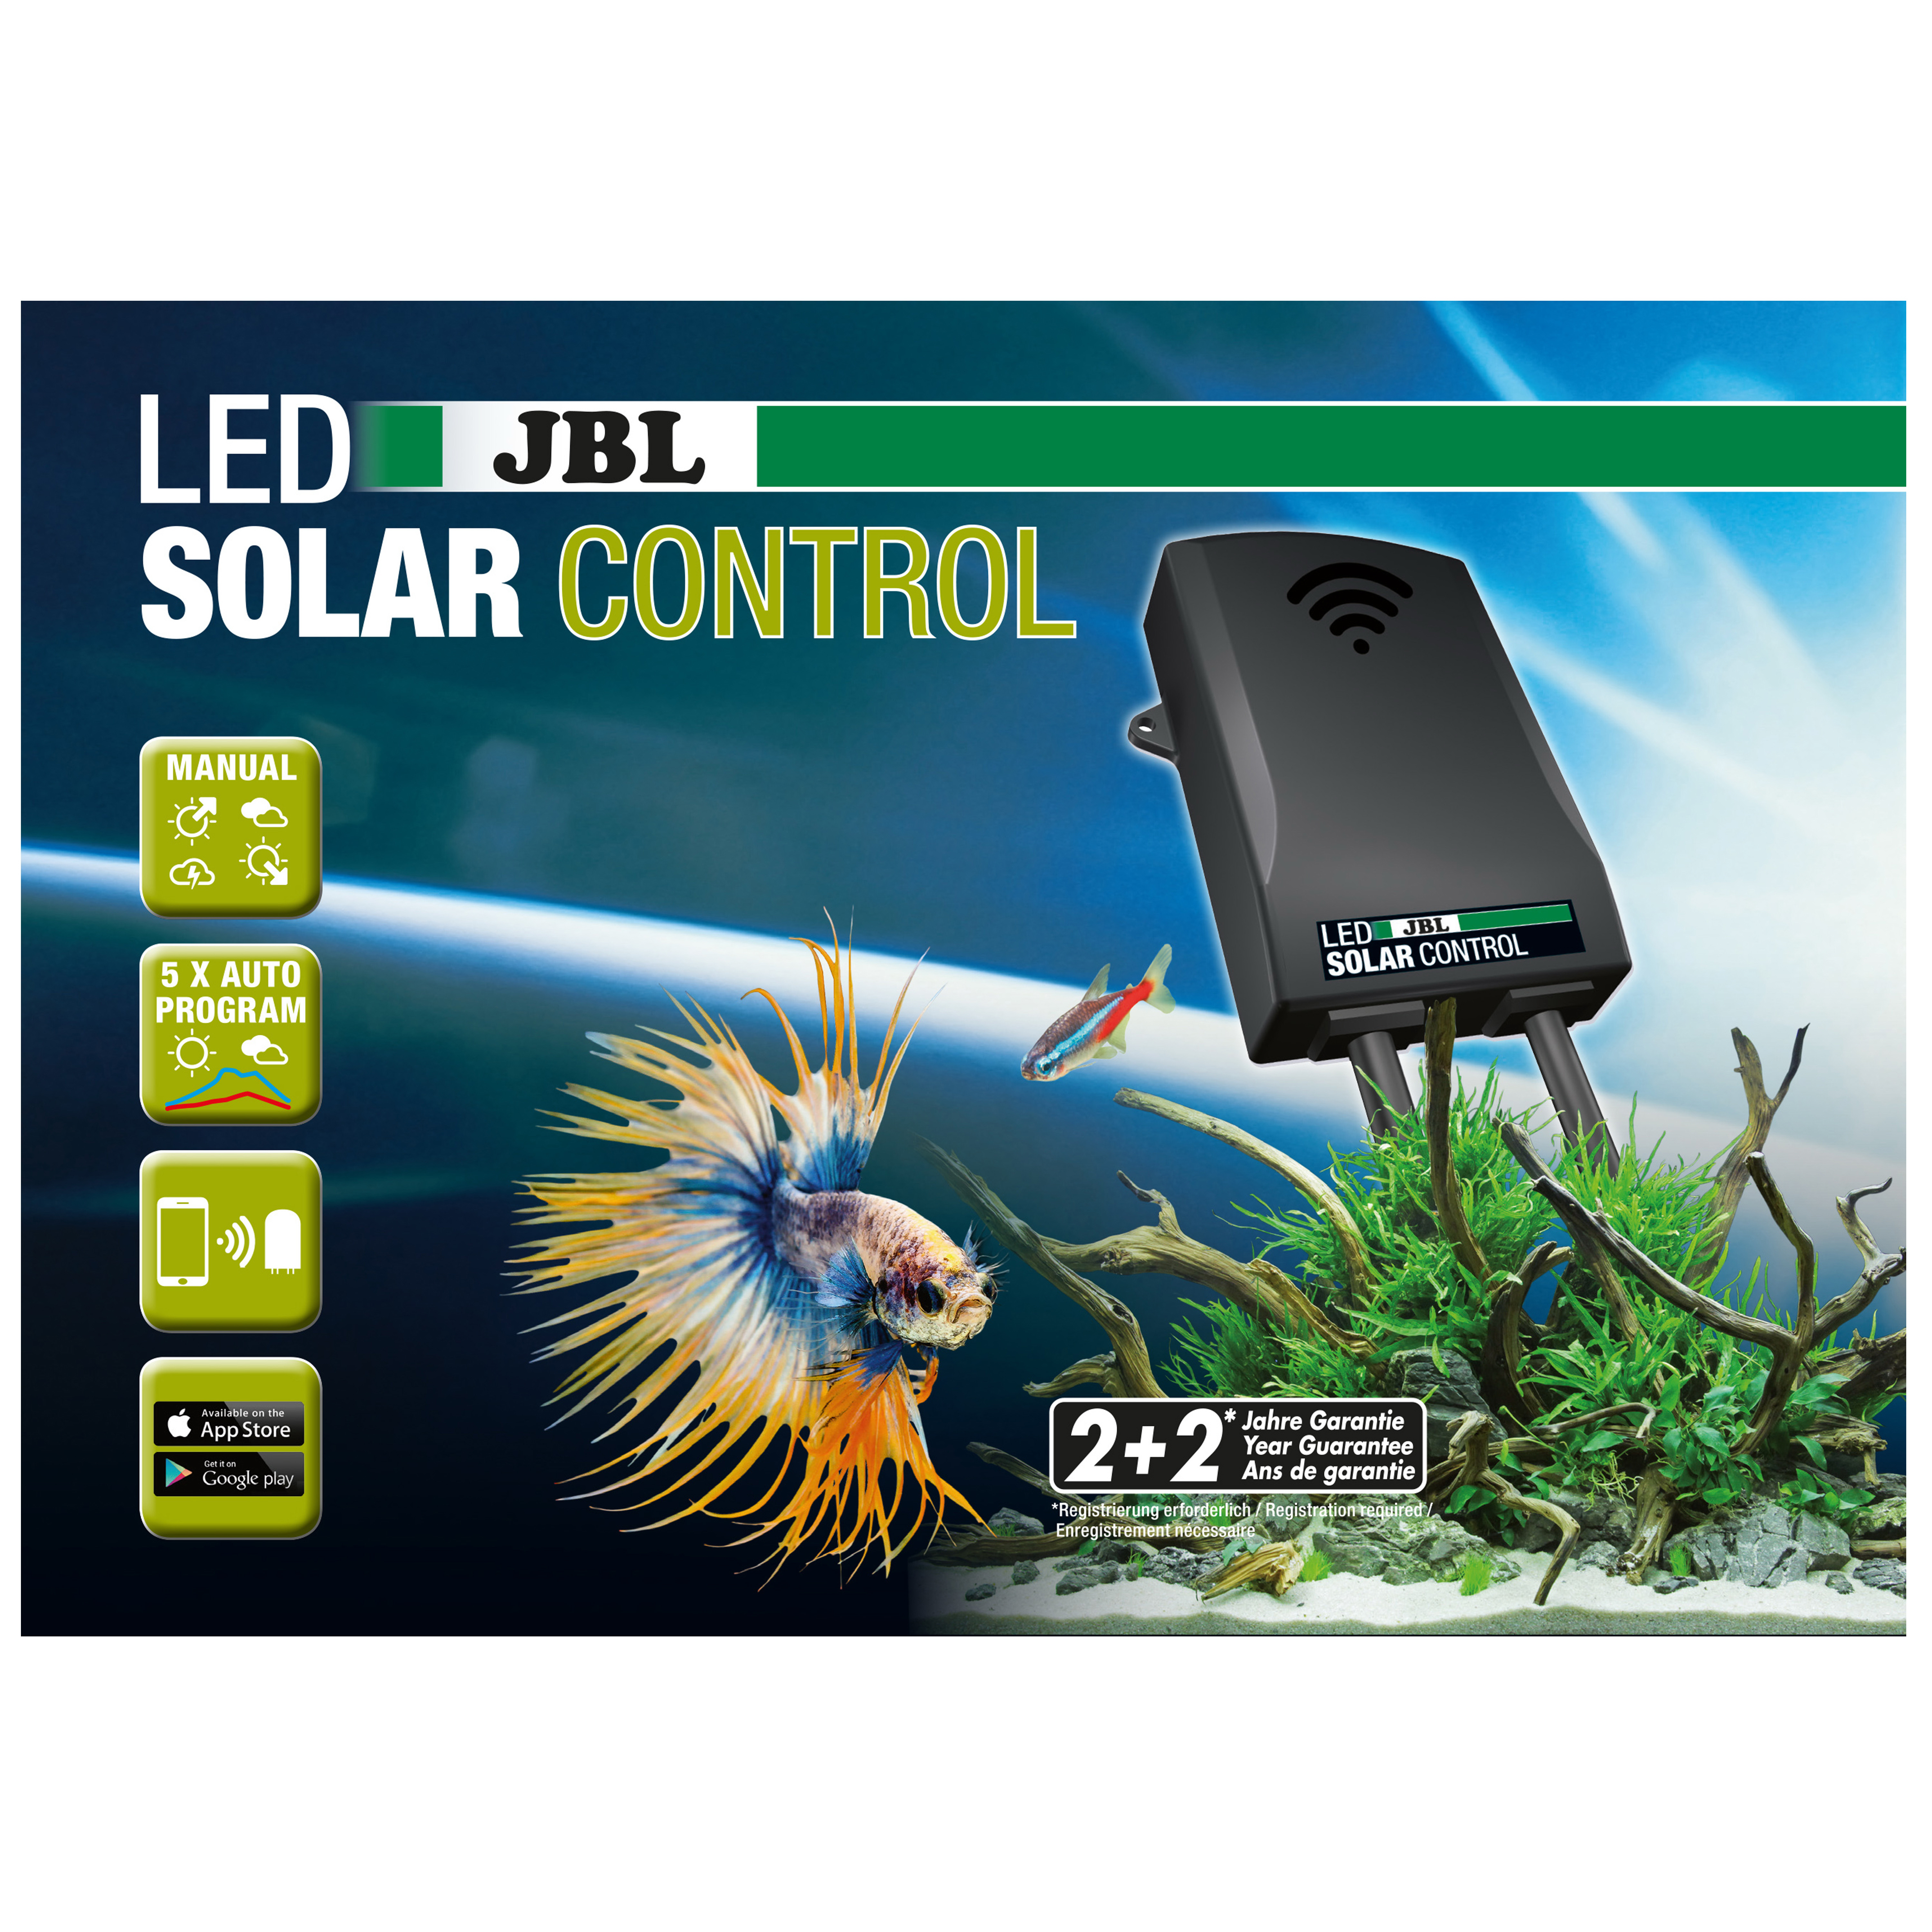 JBL LED SOLAR CONTROL